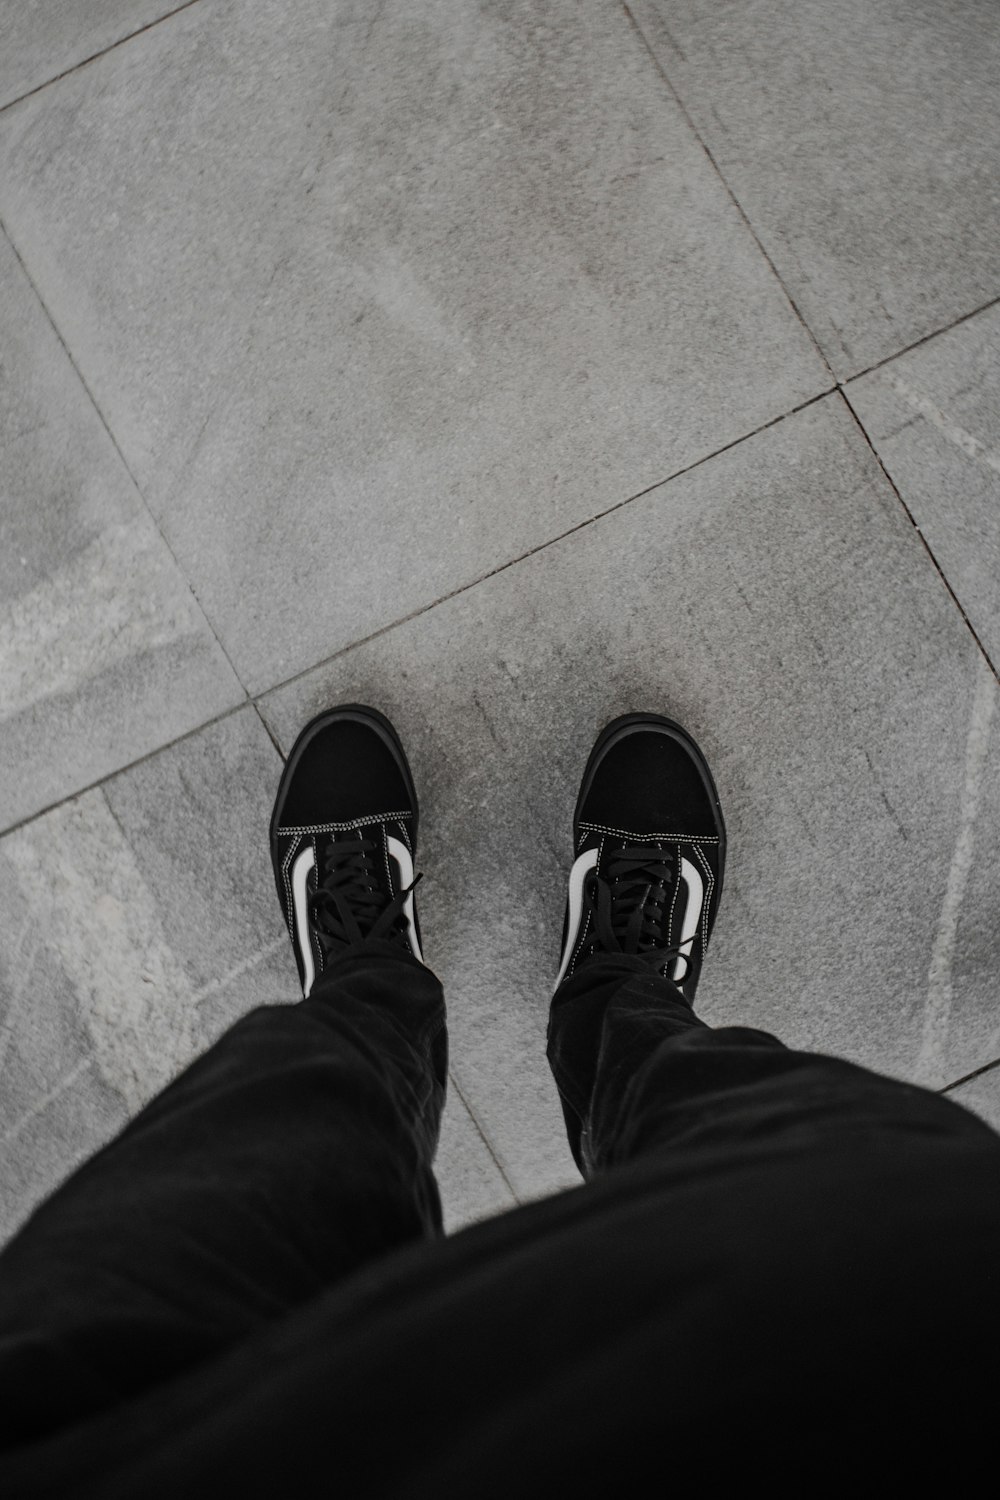 a pair of feet standing on a sidewalk